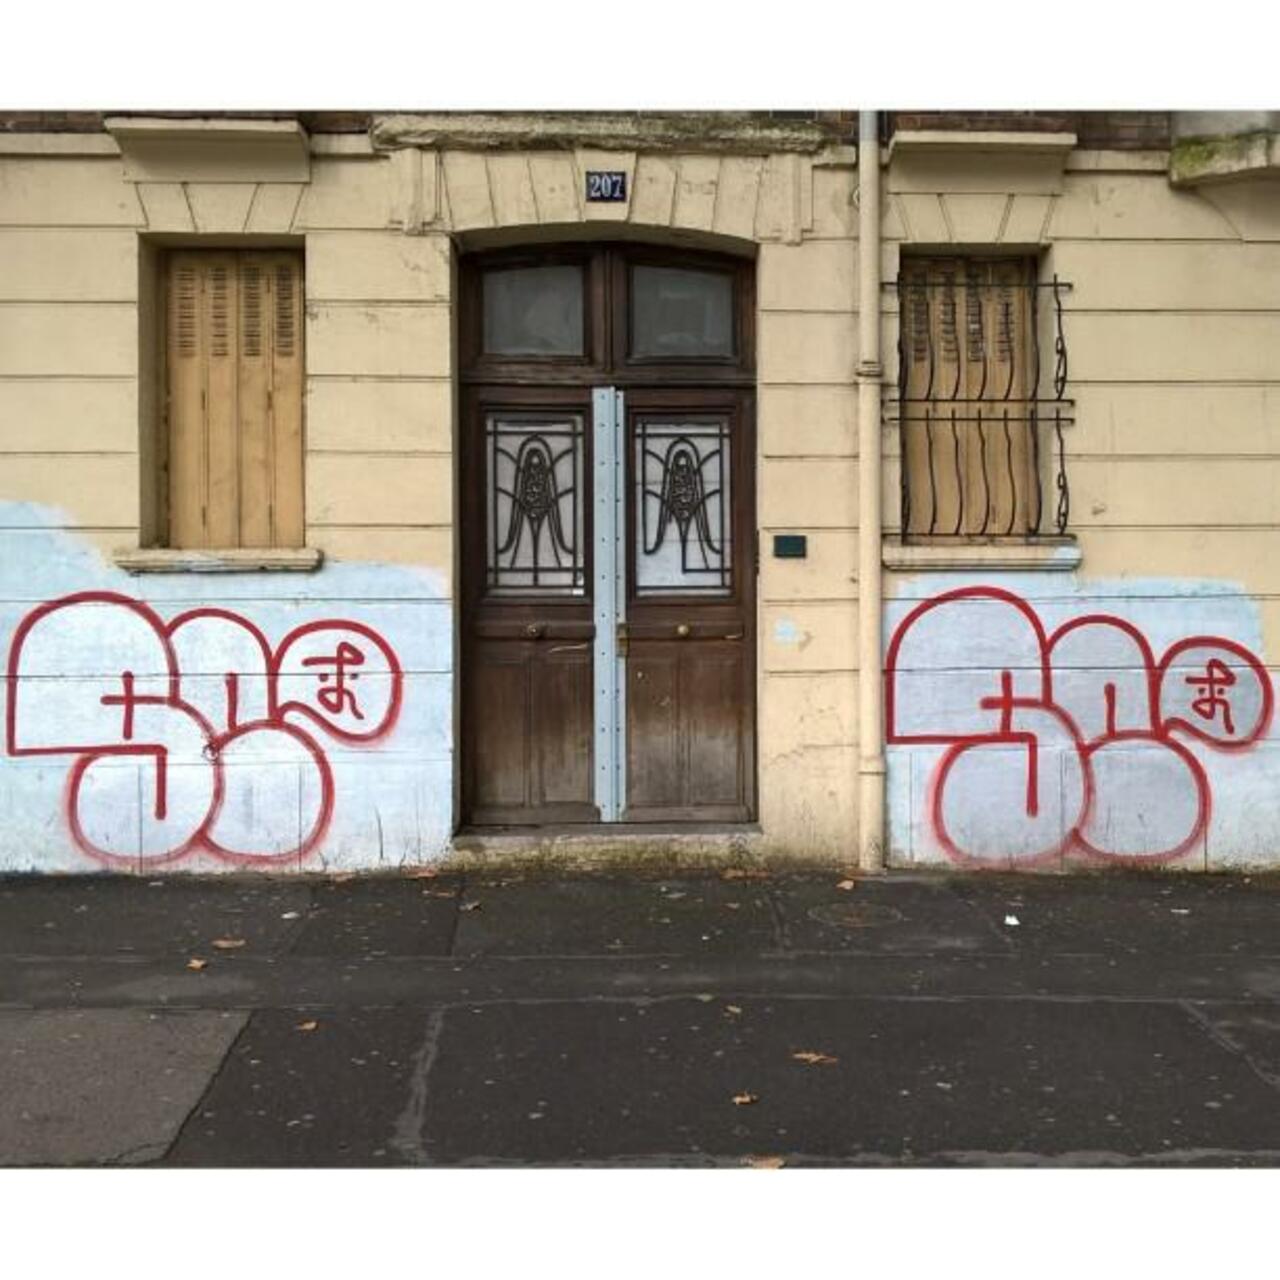 #Paris #graffiti photo by @maxdimontemarciano http://ift.tt/1LWc9dZ #StreetArt http://t.co/JHMN7AgNai